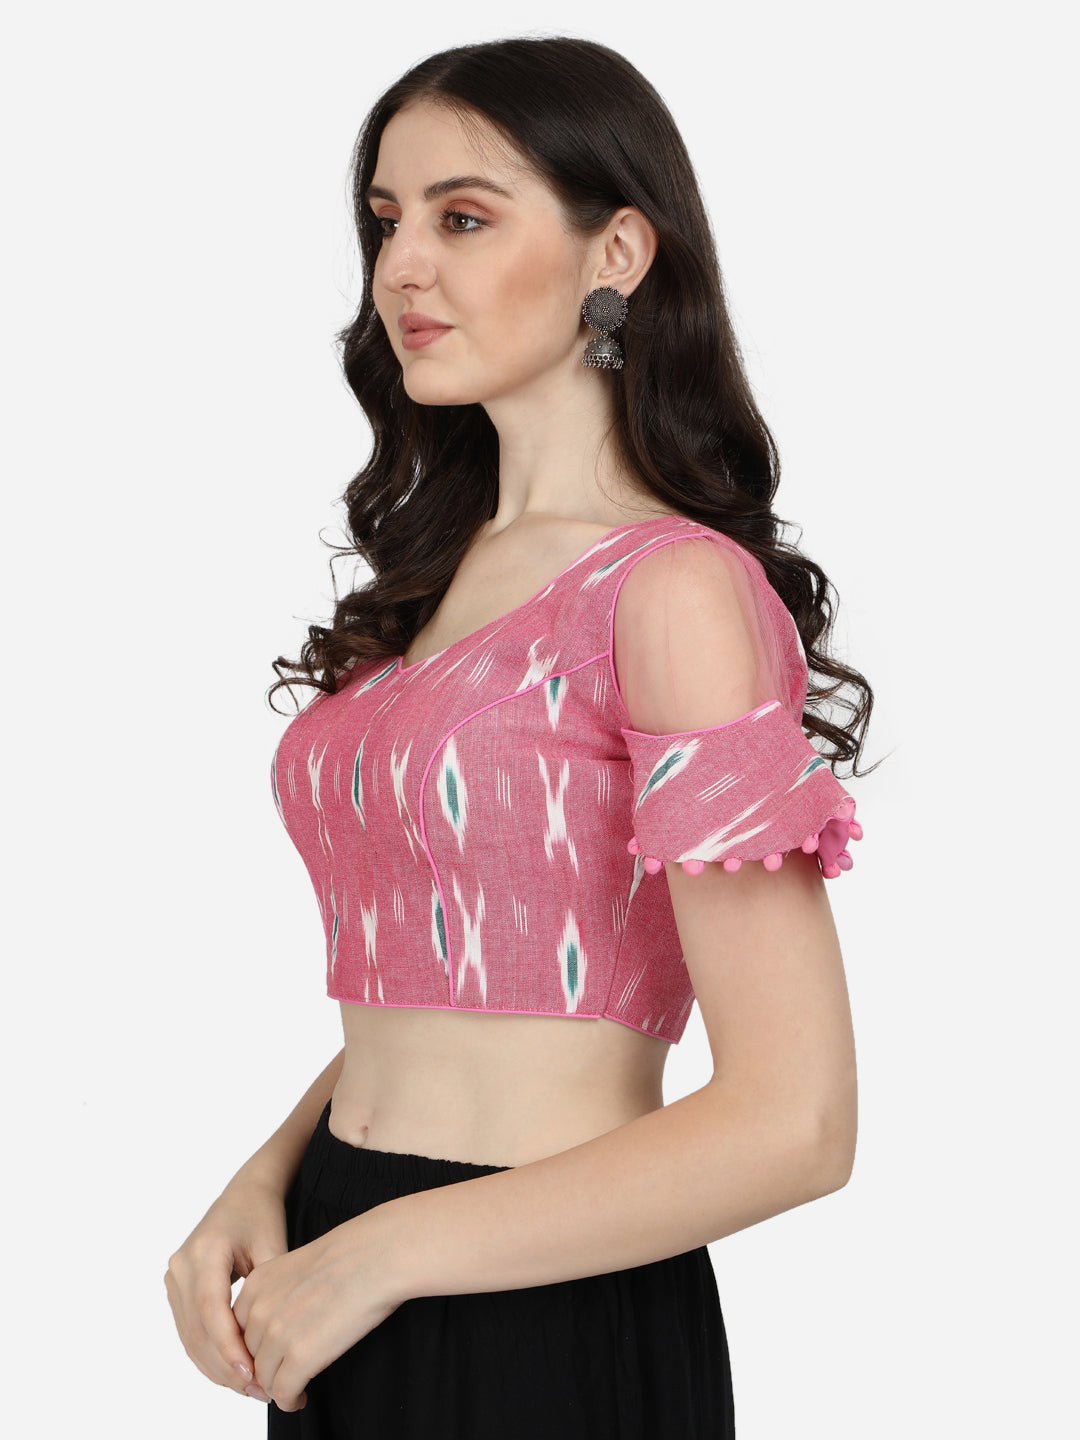 Designer Light Pink Color Printed Cotton Blouse